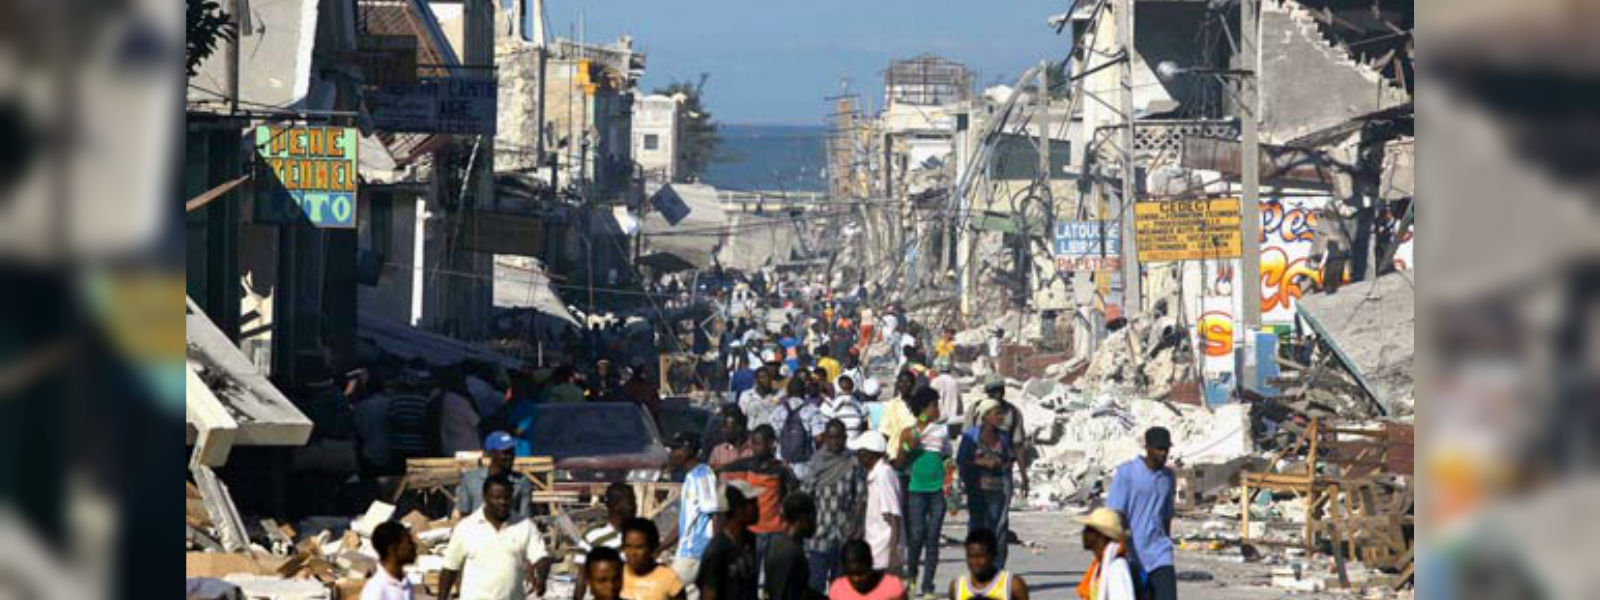 Haiti marks ninth anniversary of deadly quake